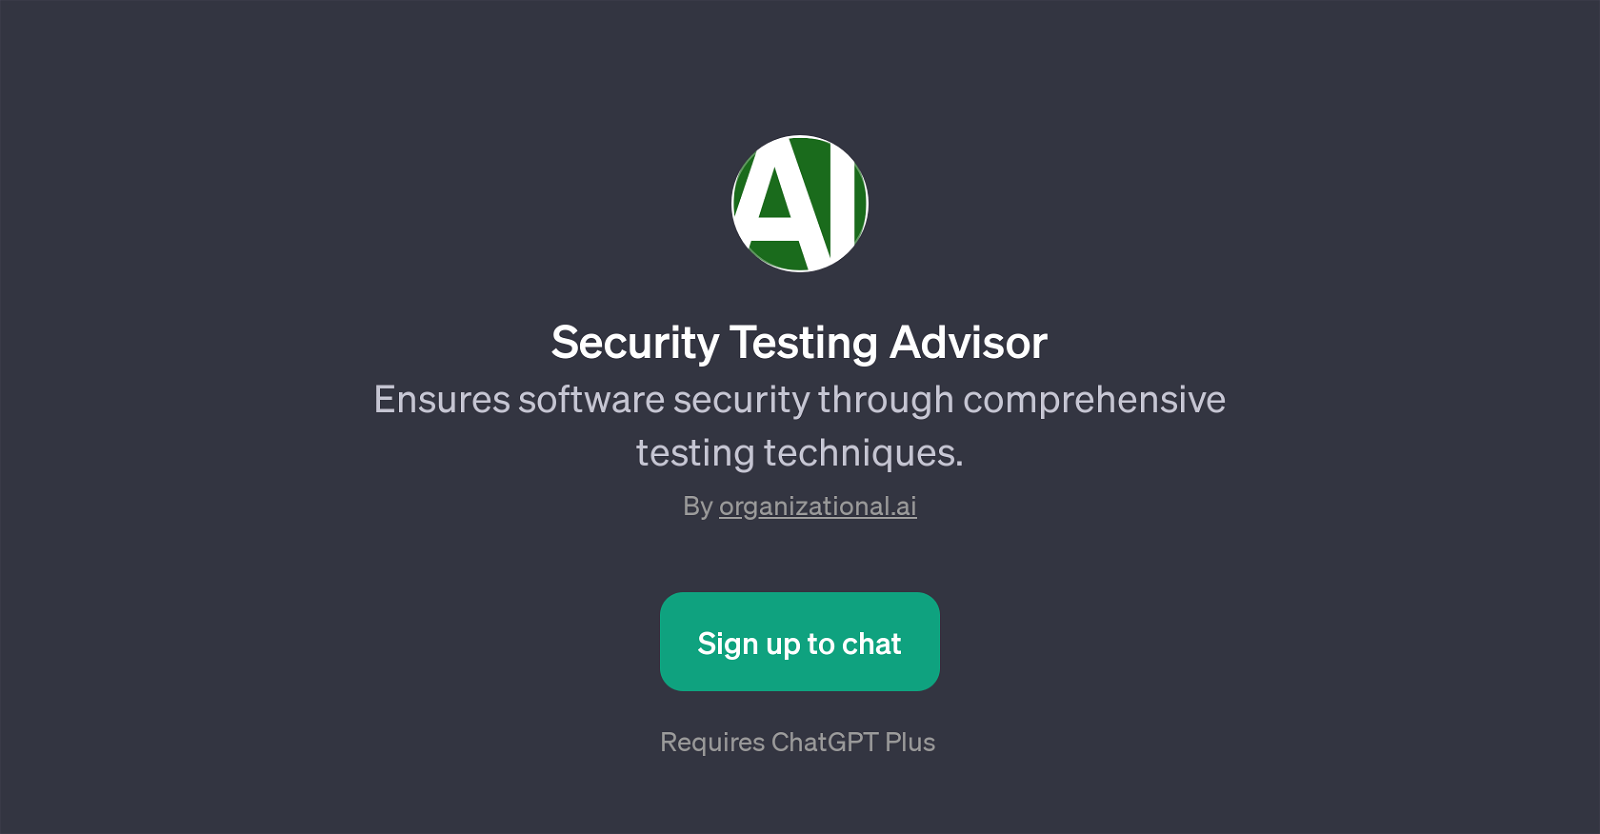 Security Testing Advisor website